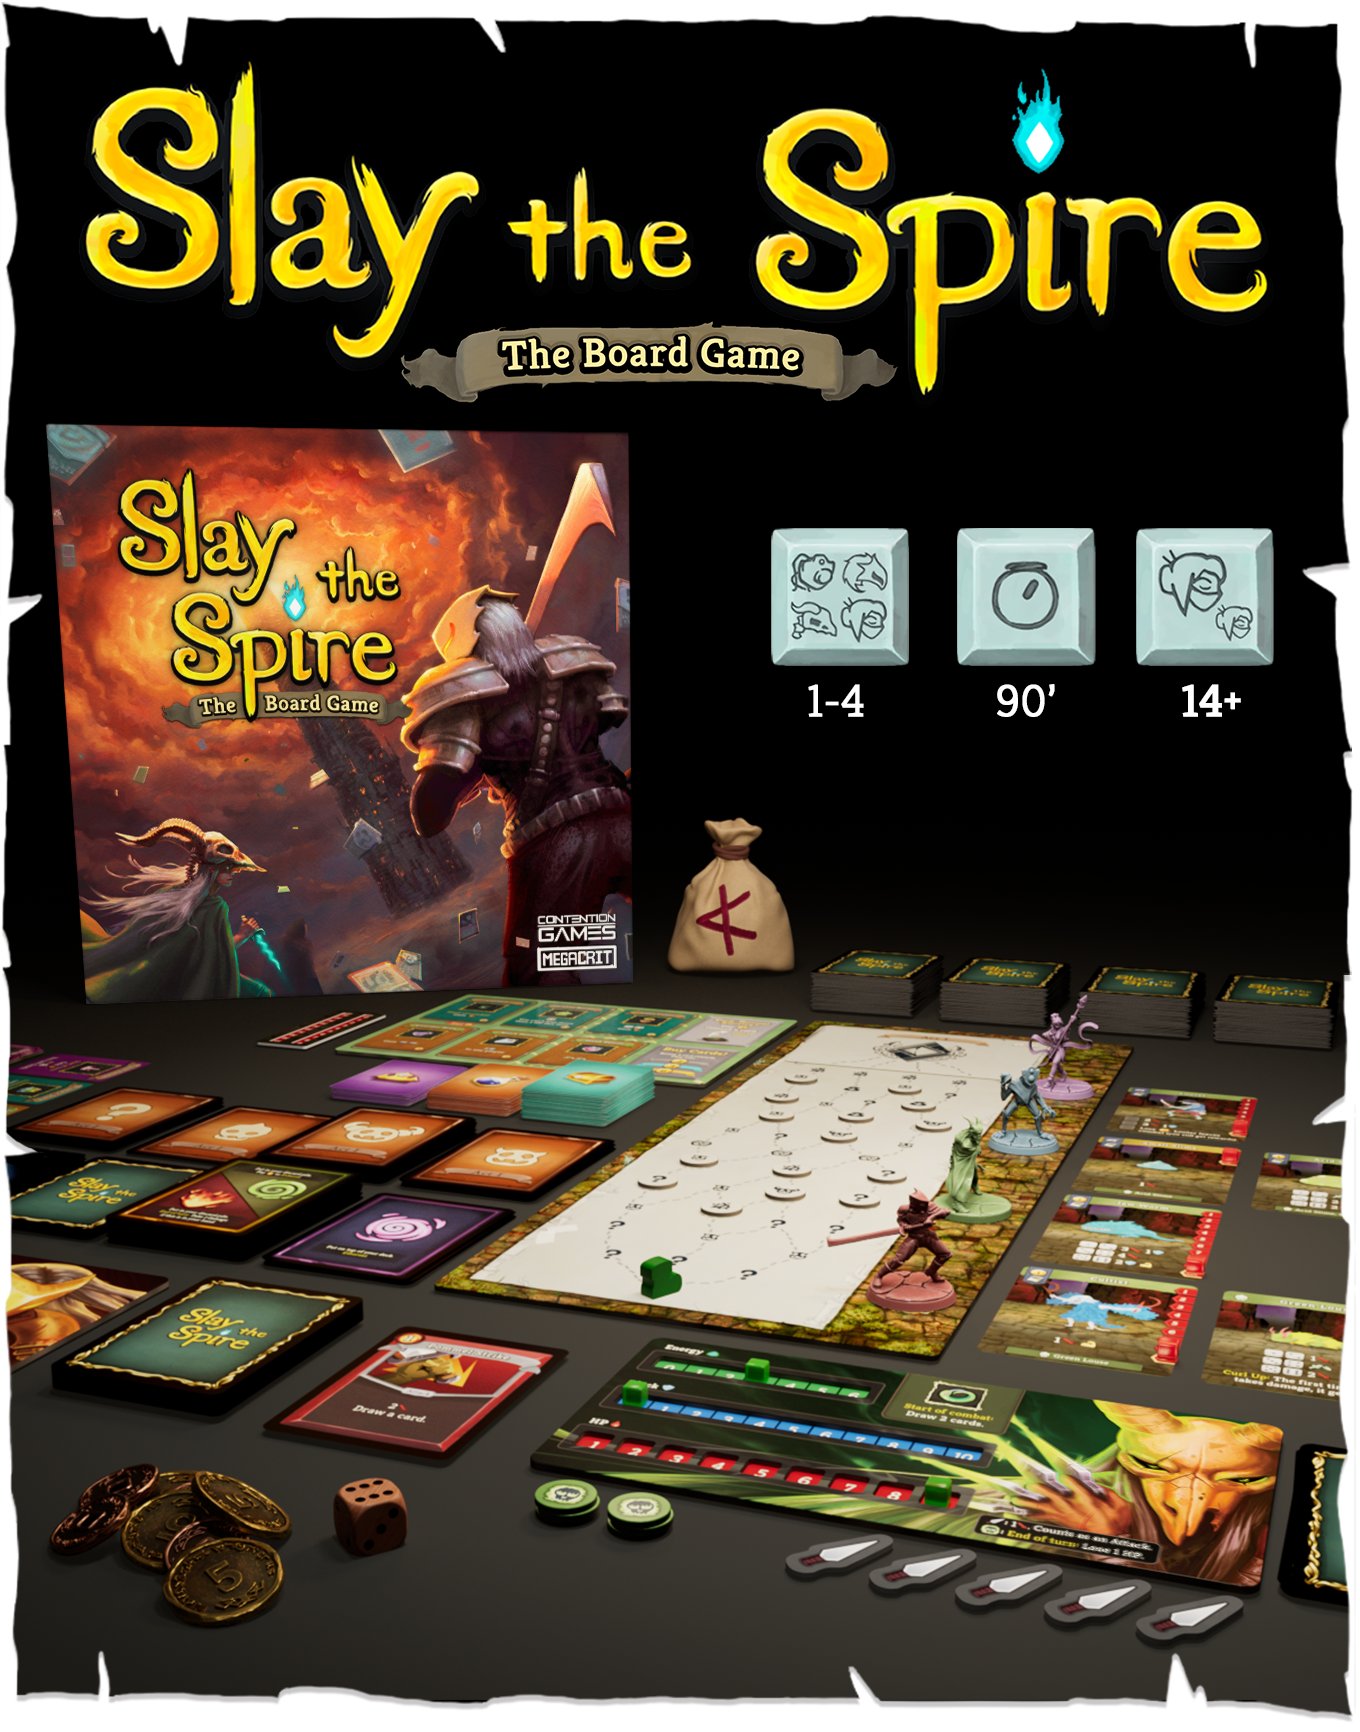 Slay the Spire: The Board Game 日本語版について – KenBill